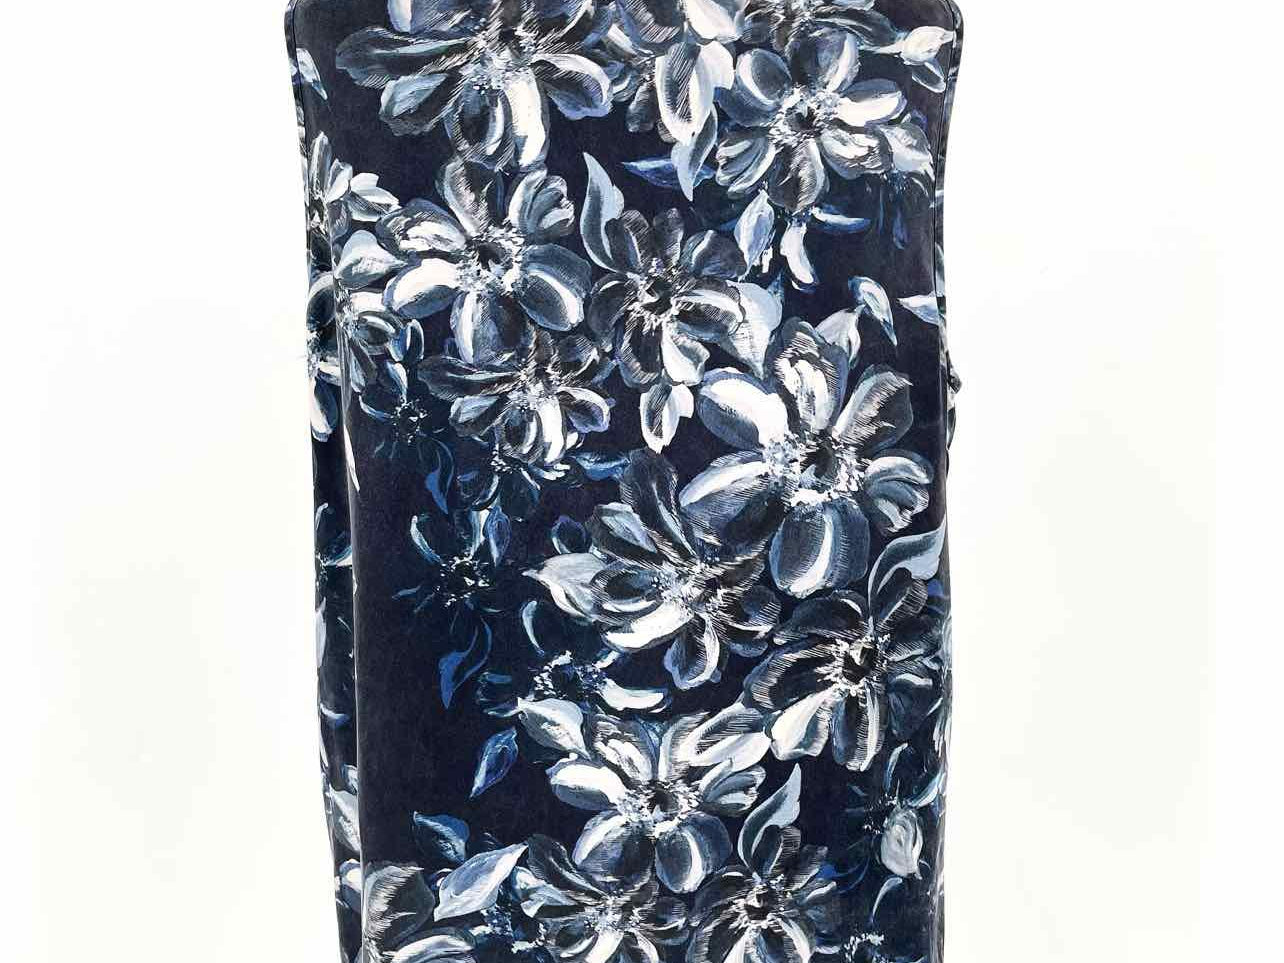 ST. JOHN Women's Navy Print Tank Silk Blend Floral Size M Sleeveless - Article Consignment